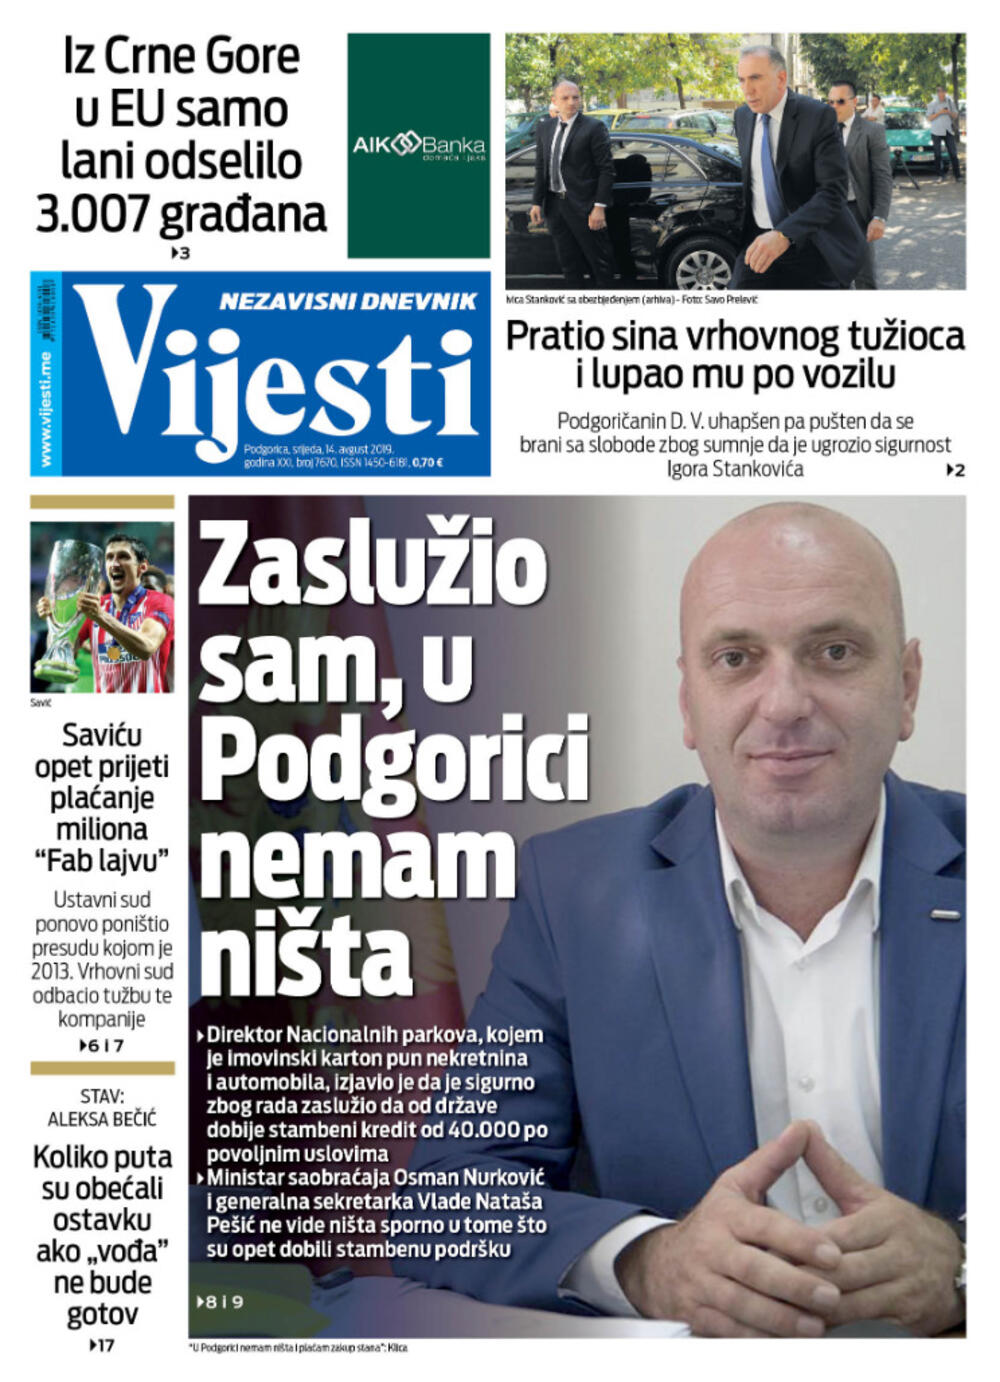 Naslovna strana "Vijesti" za 14. avgust